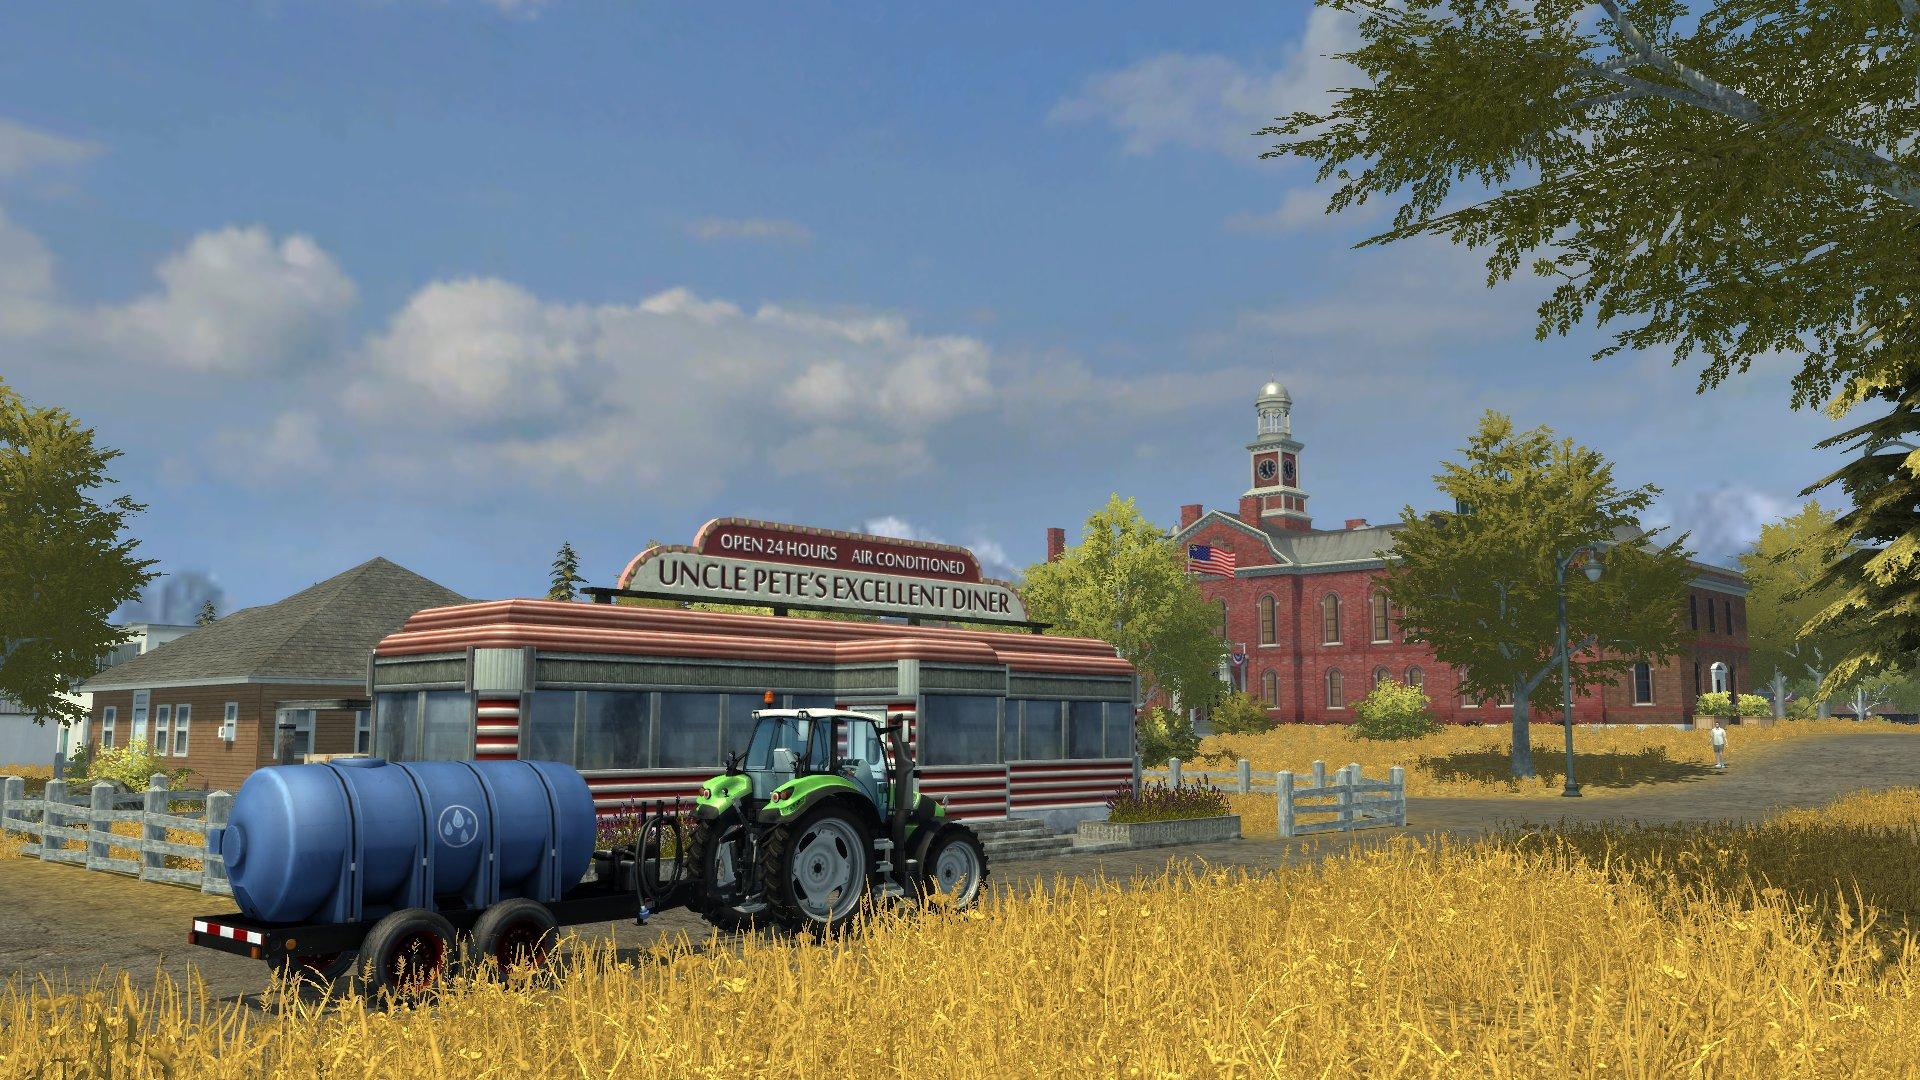 farming simulator 17 ps3 gamestop